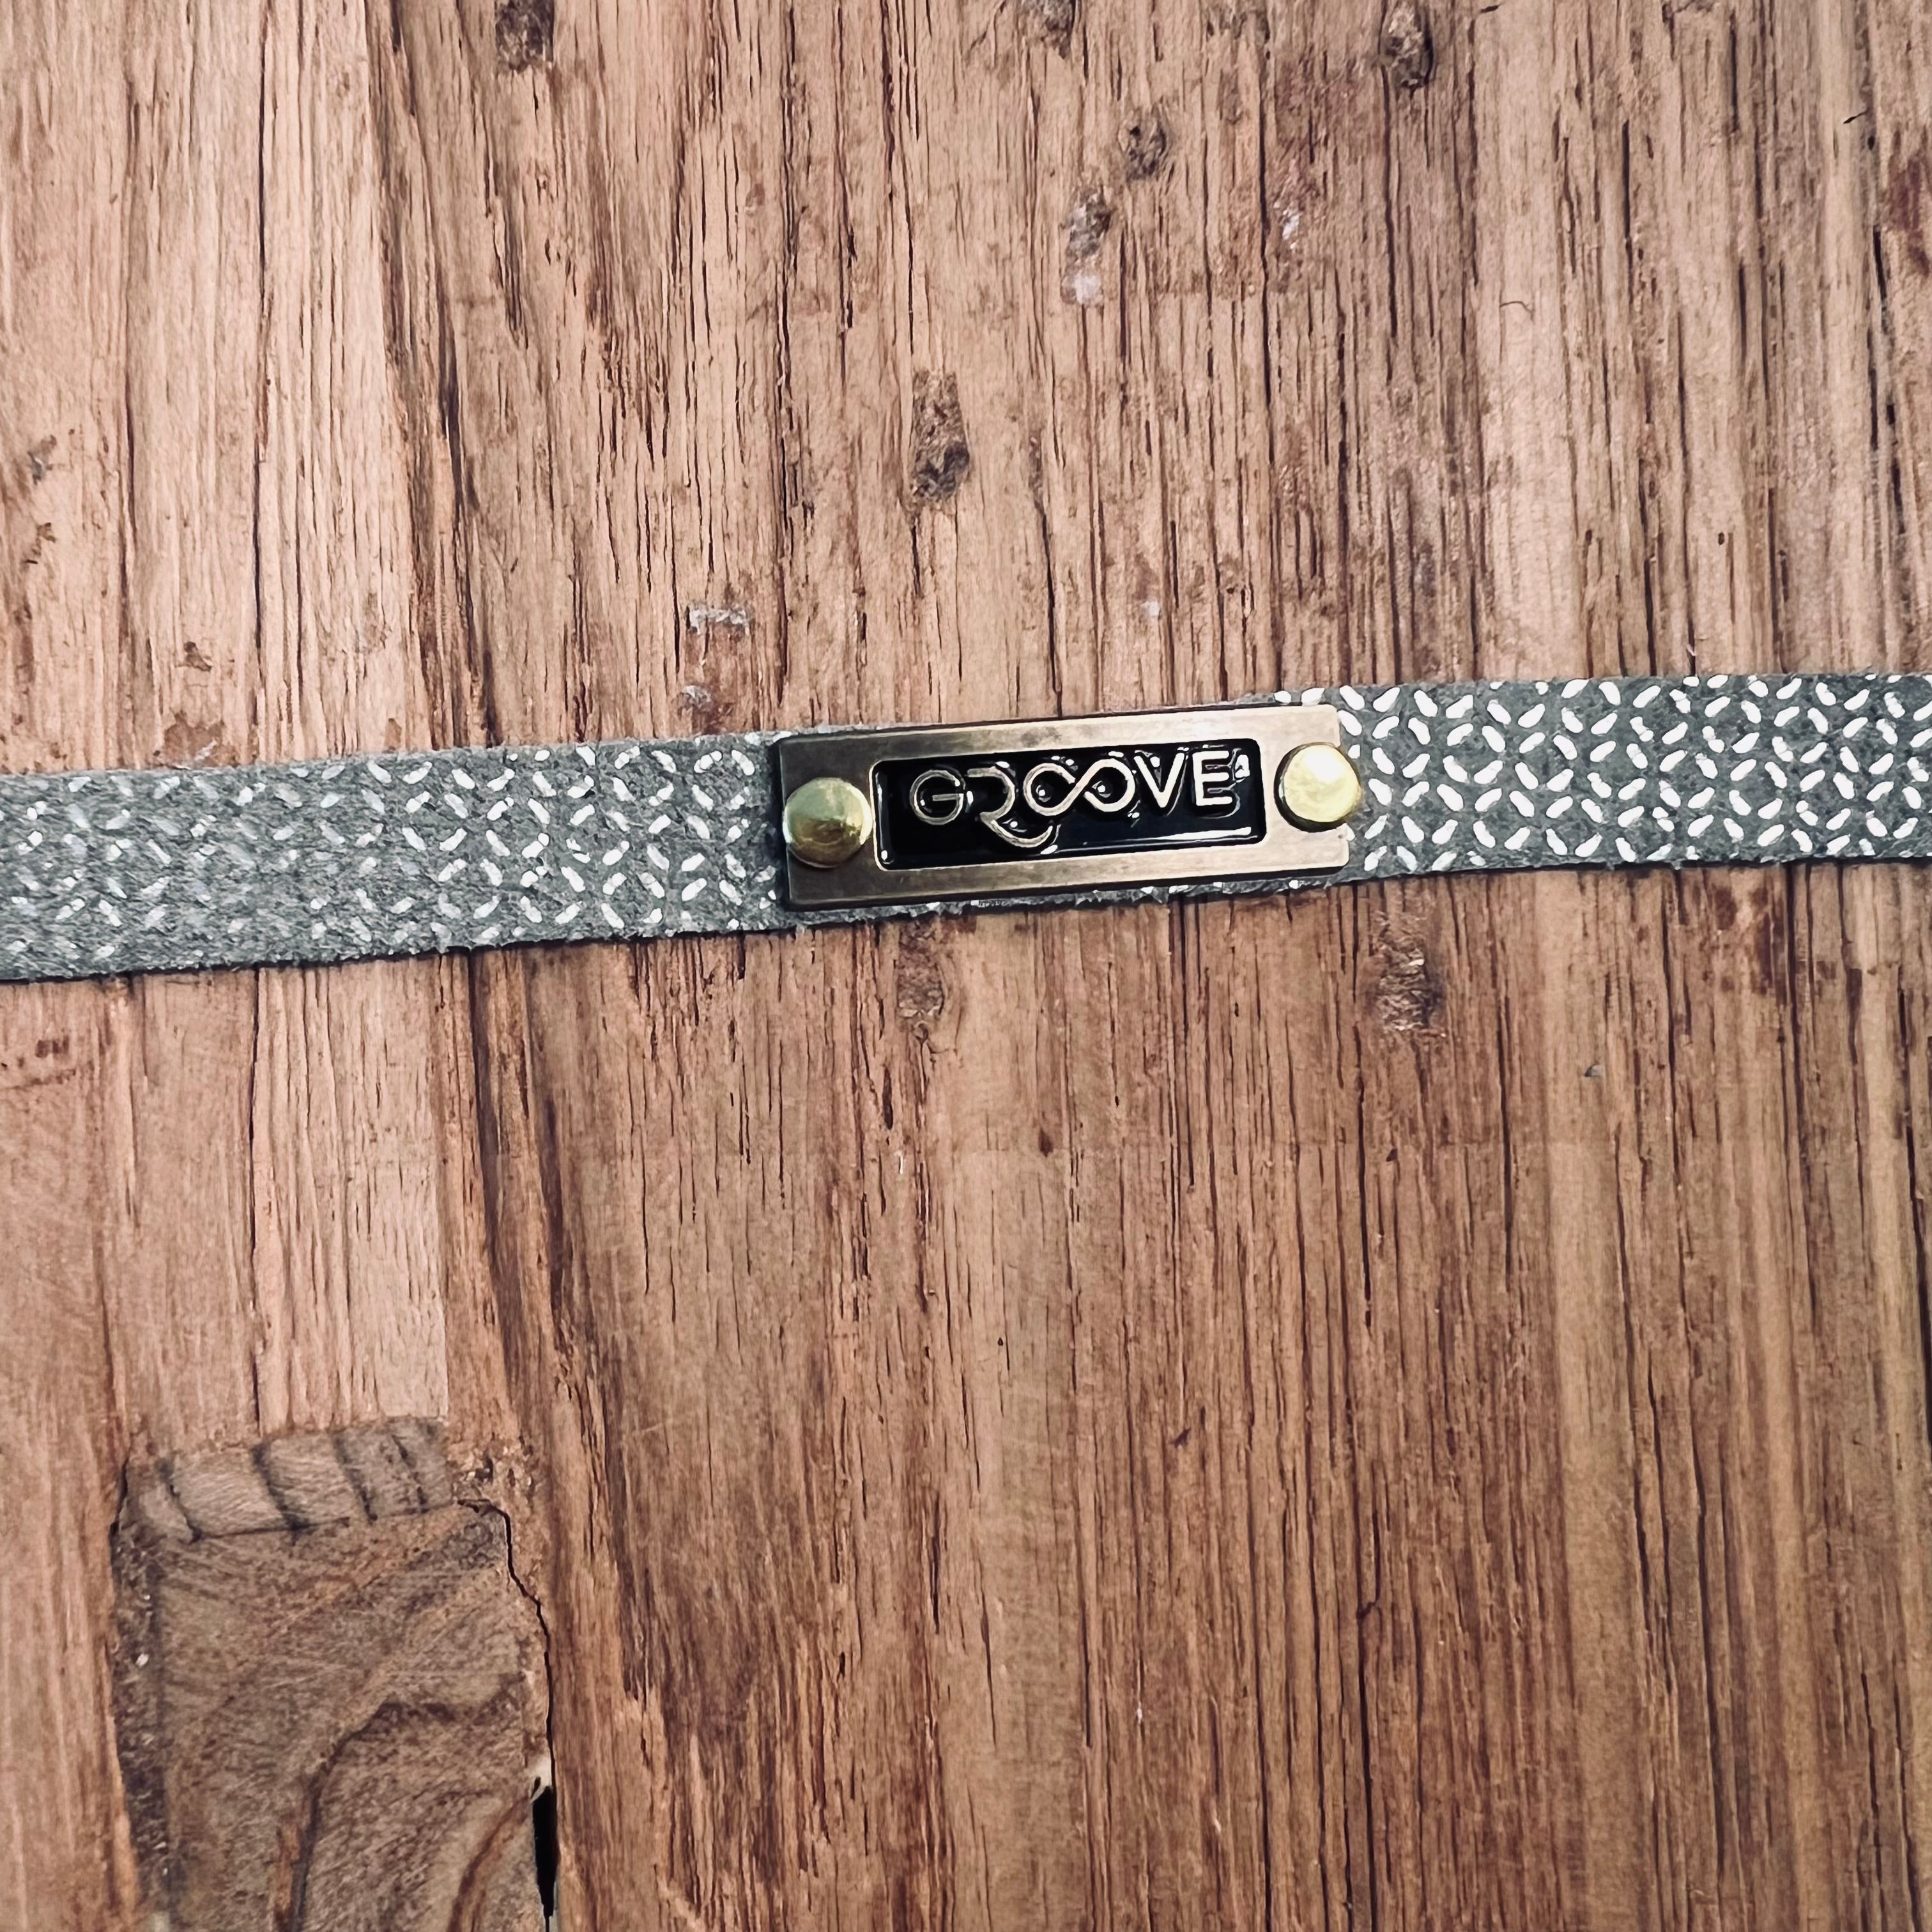 Groove Logo Leather Bracelet